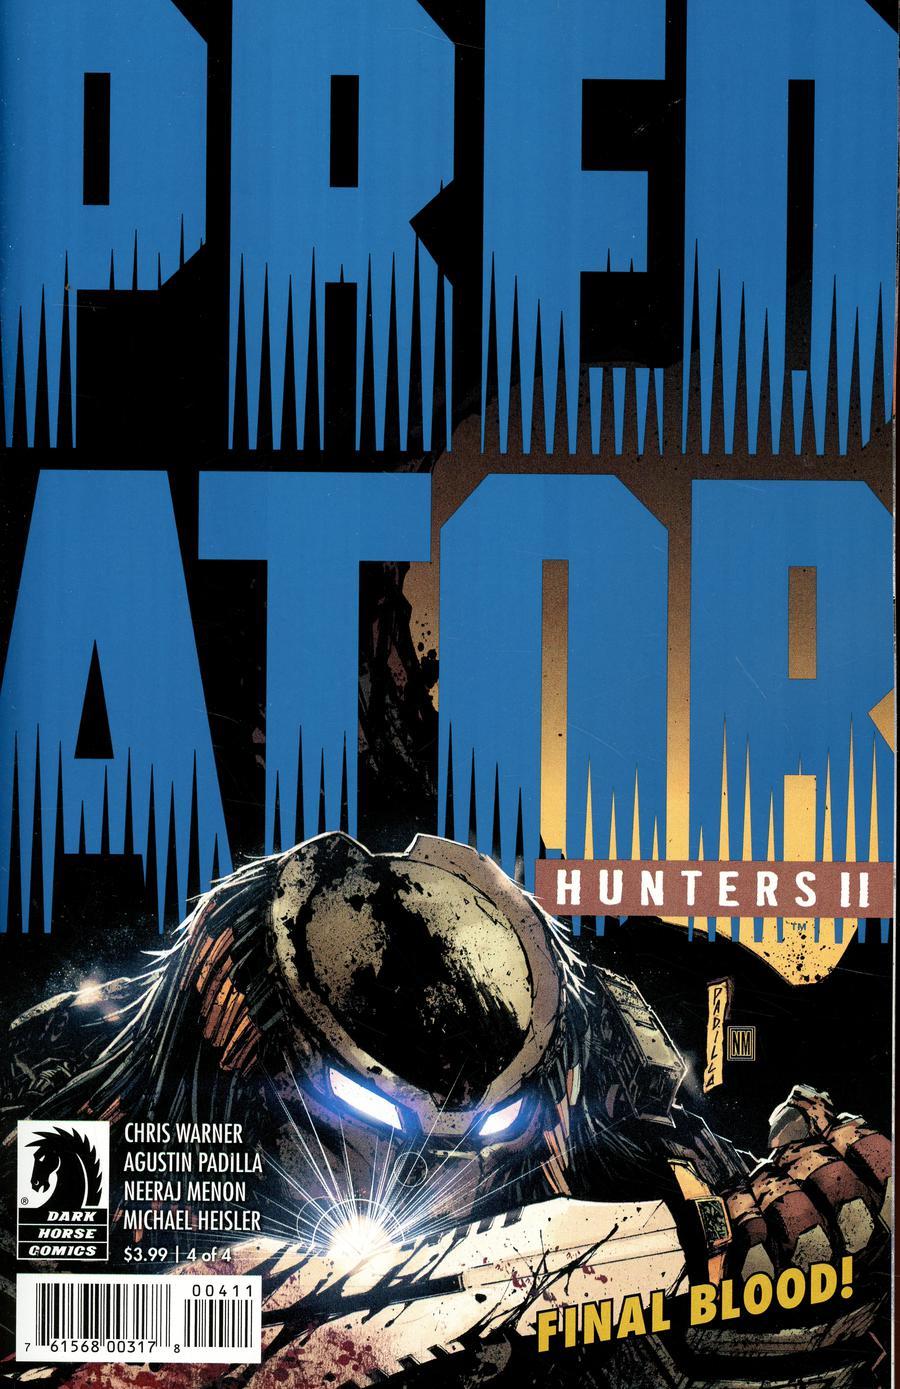 Predator Hunters II Vol. 1 #4